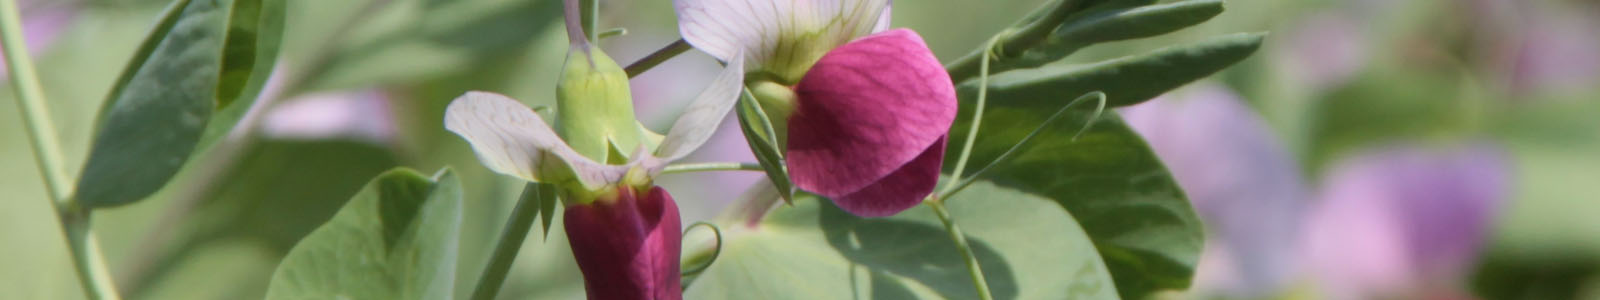 Erbsenblüte Großaufnahme ©K.Cypzirsch